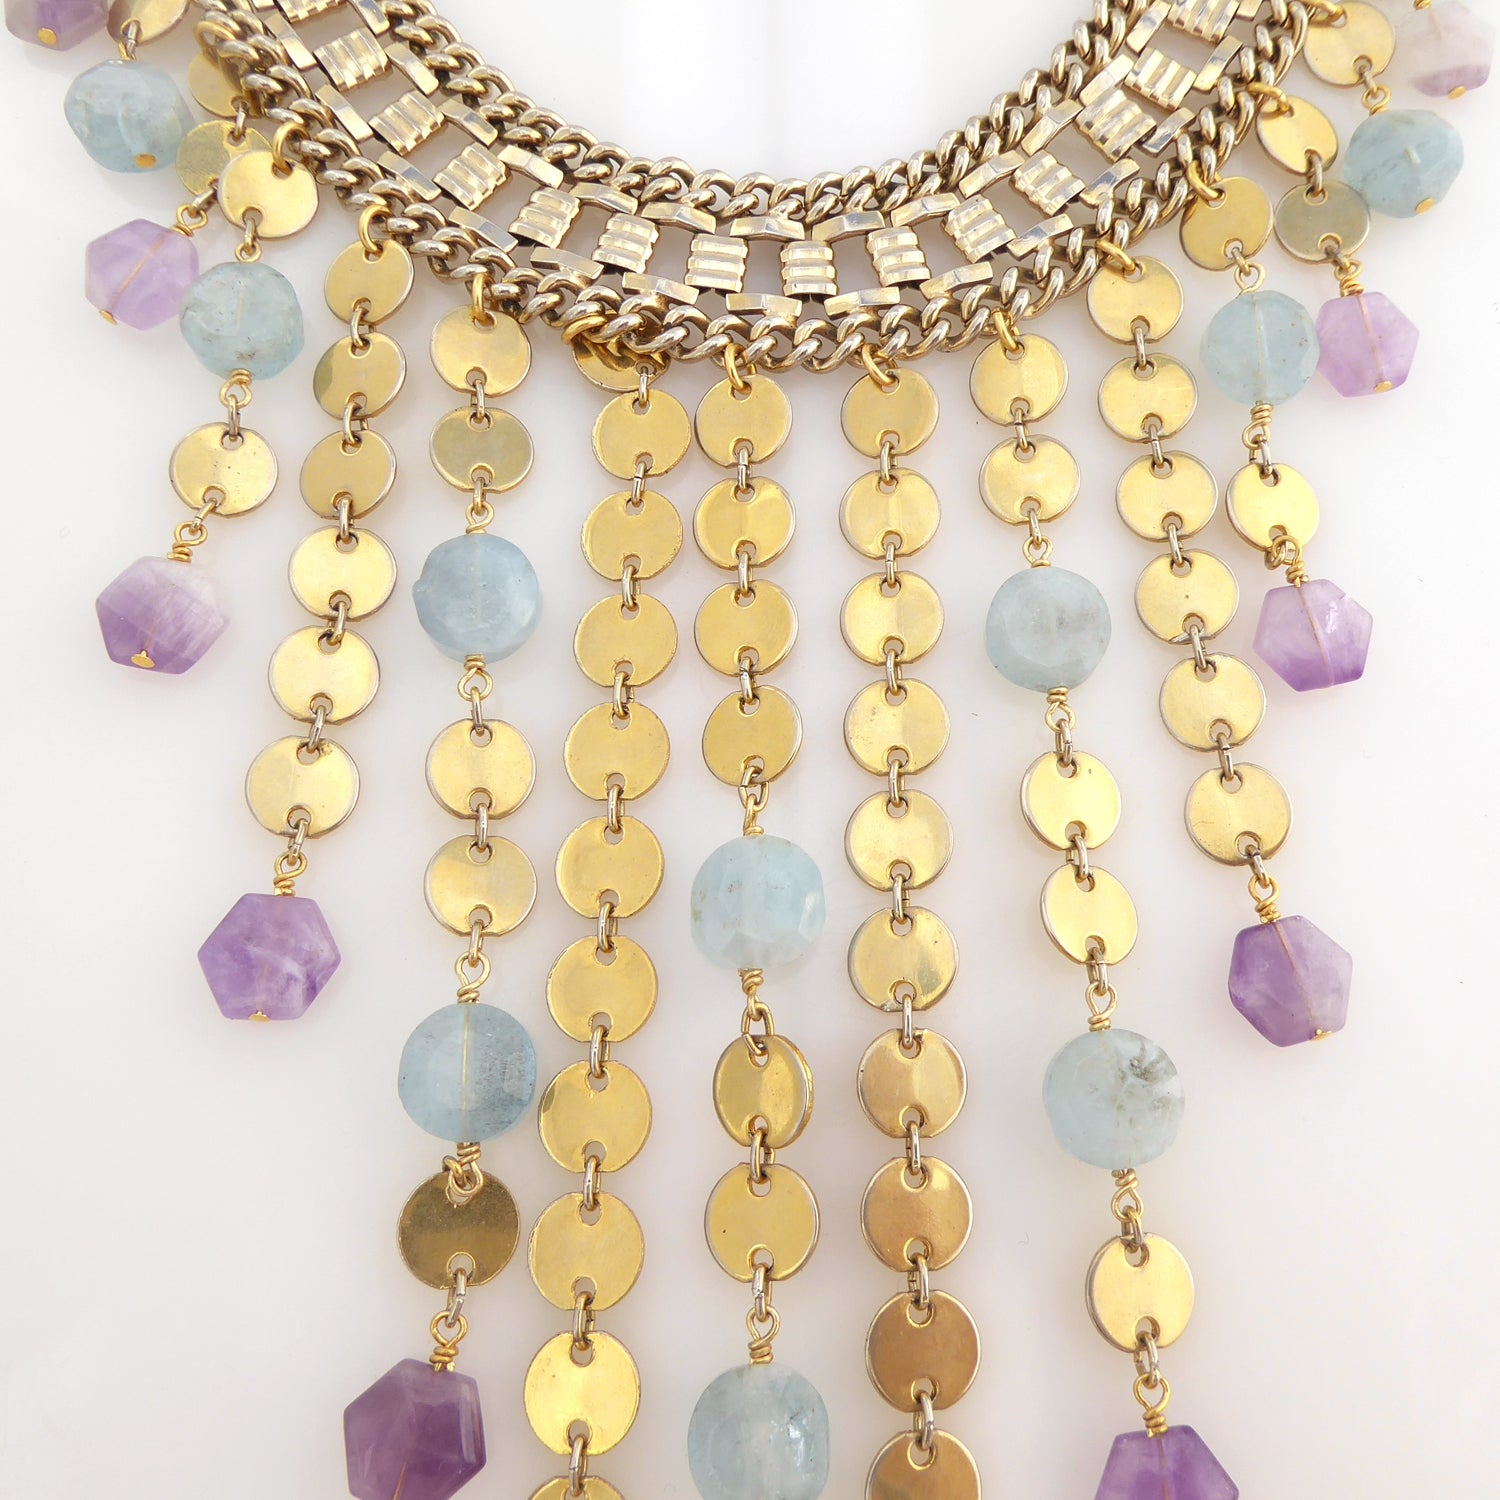 Carmeline aquamarine and amethyst necklace by Jenny Dayco 5